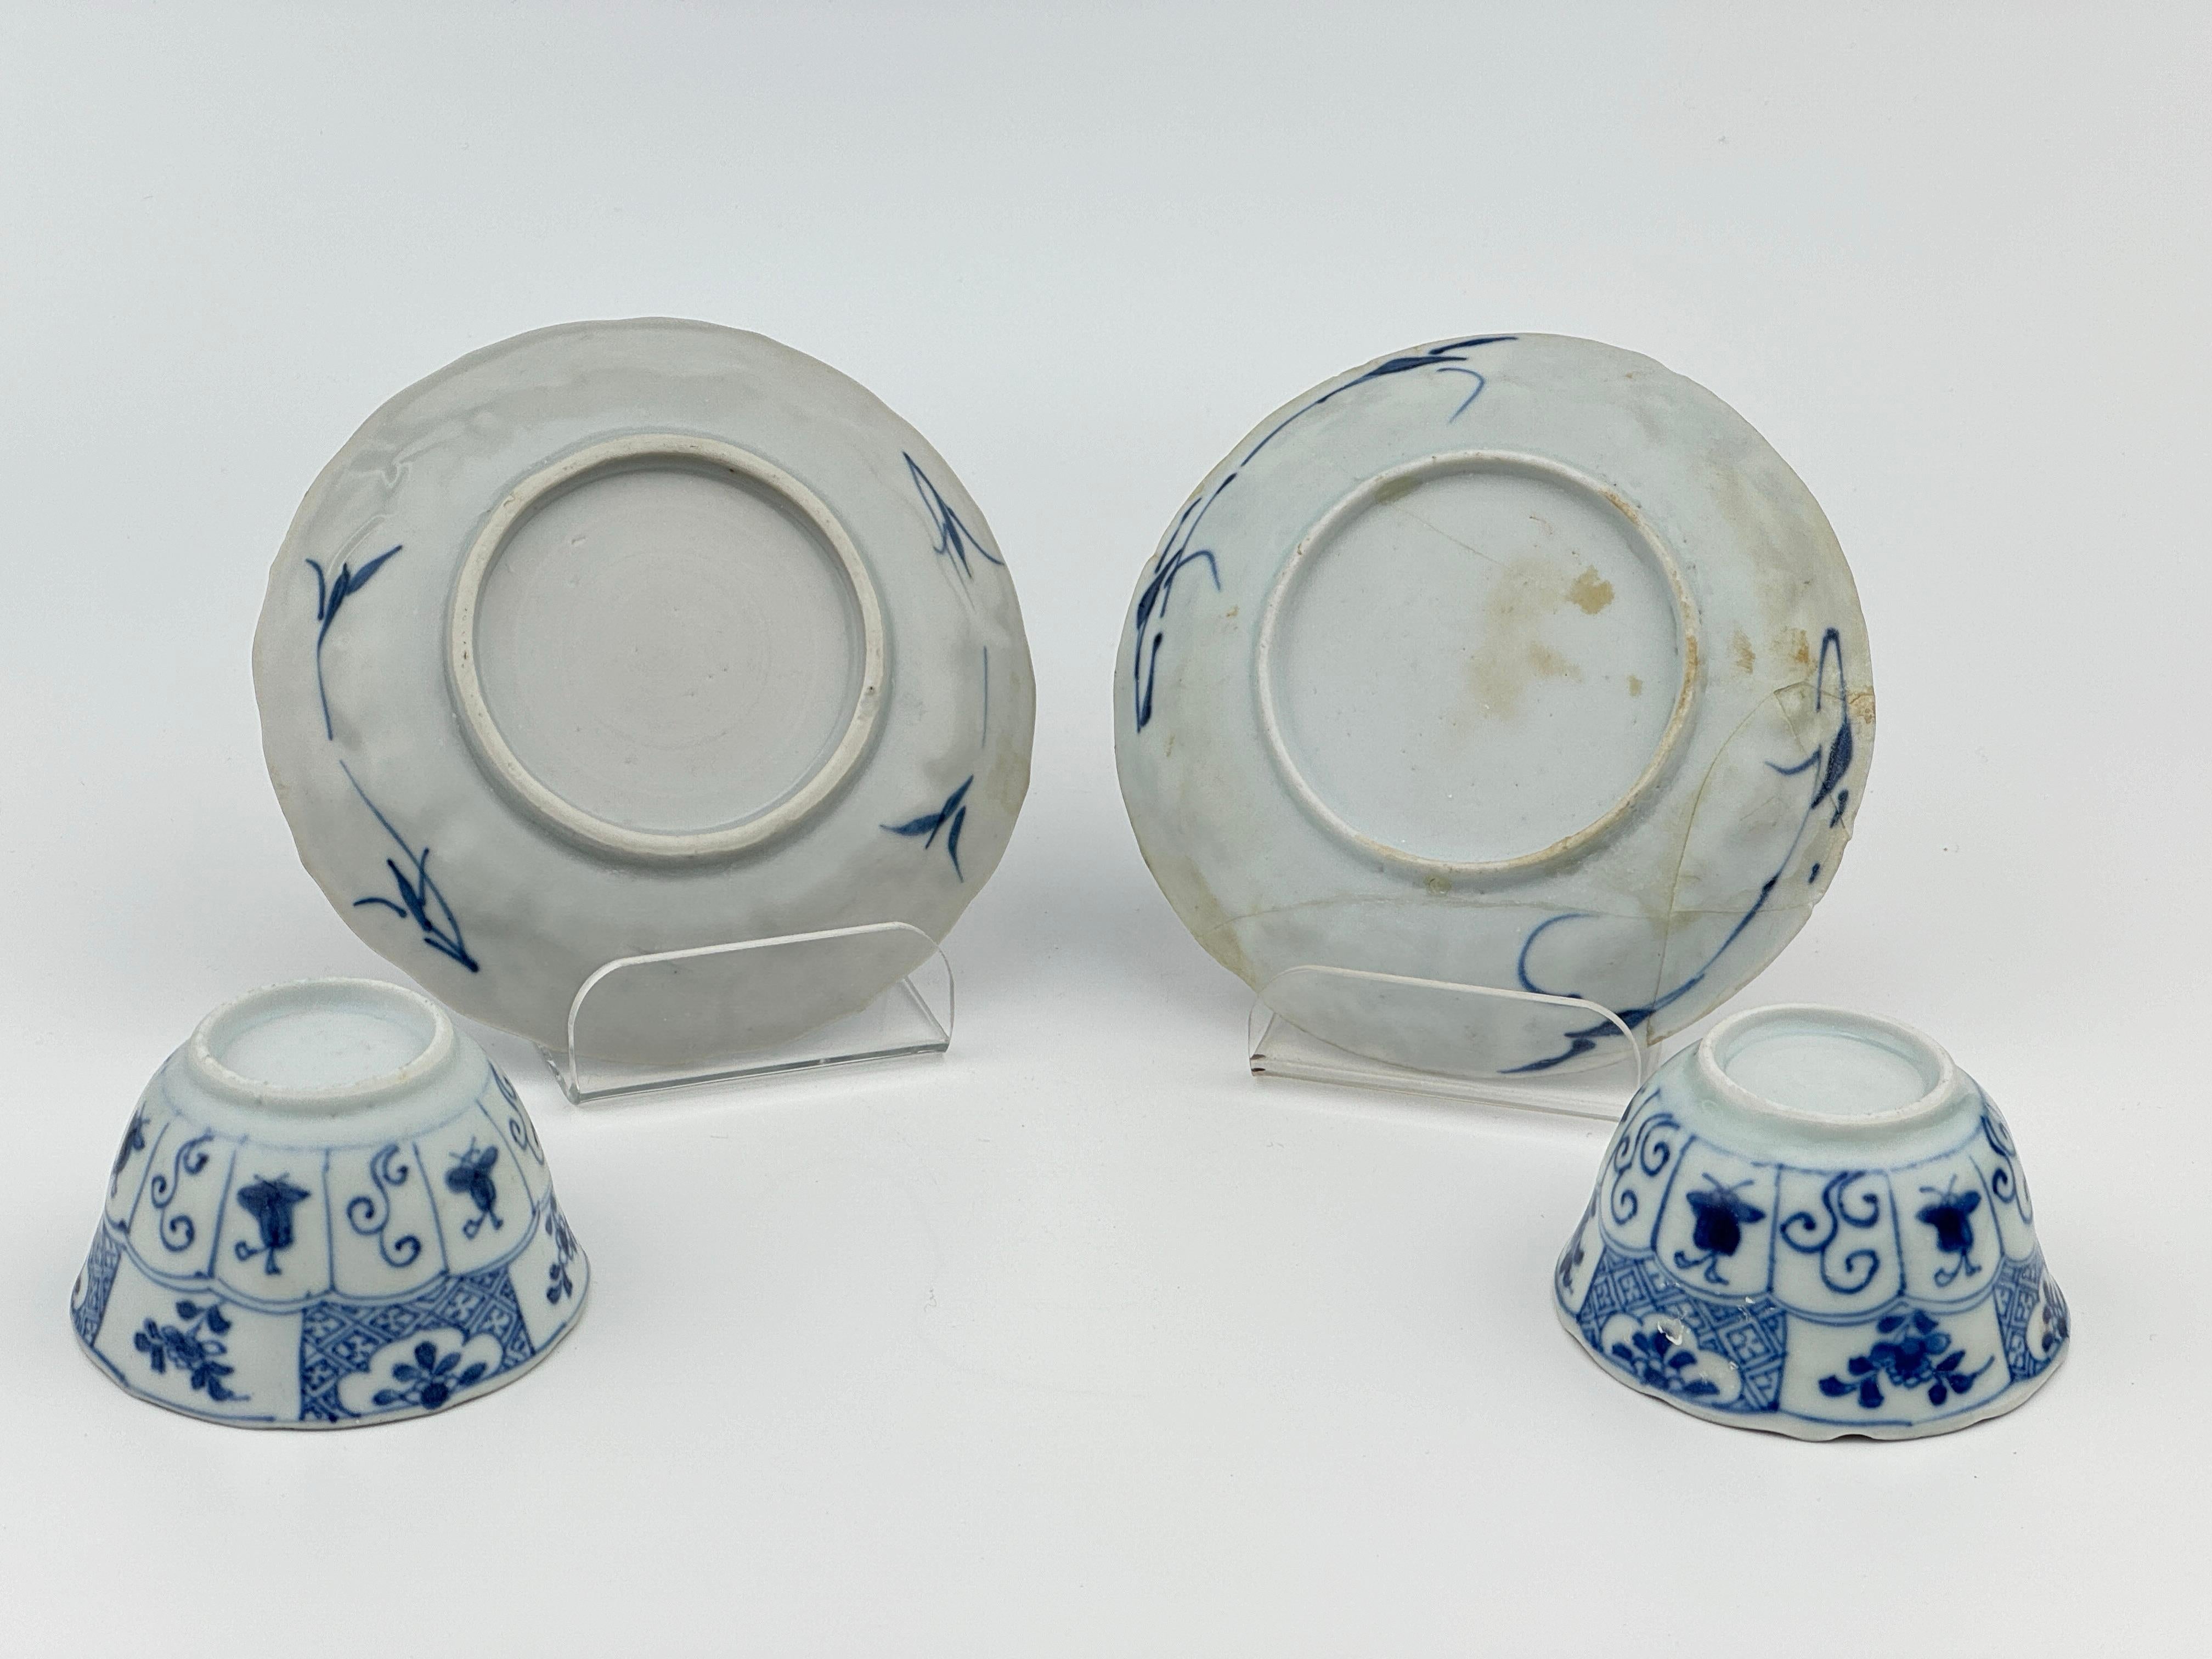 Blau-weißes Teeservice um 1725, Qing Dynastie, Herrschaft Yongzheng (Frühes 18. Jahrhundert) im Angebot